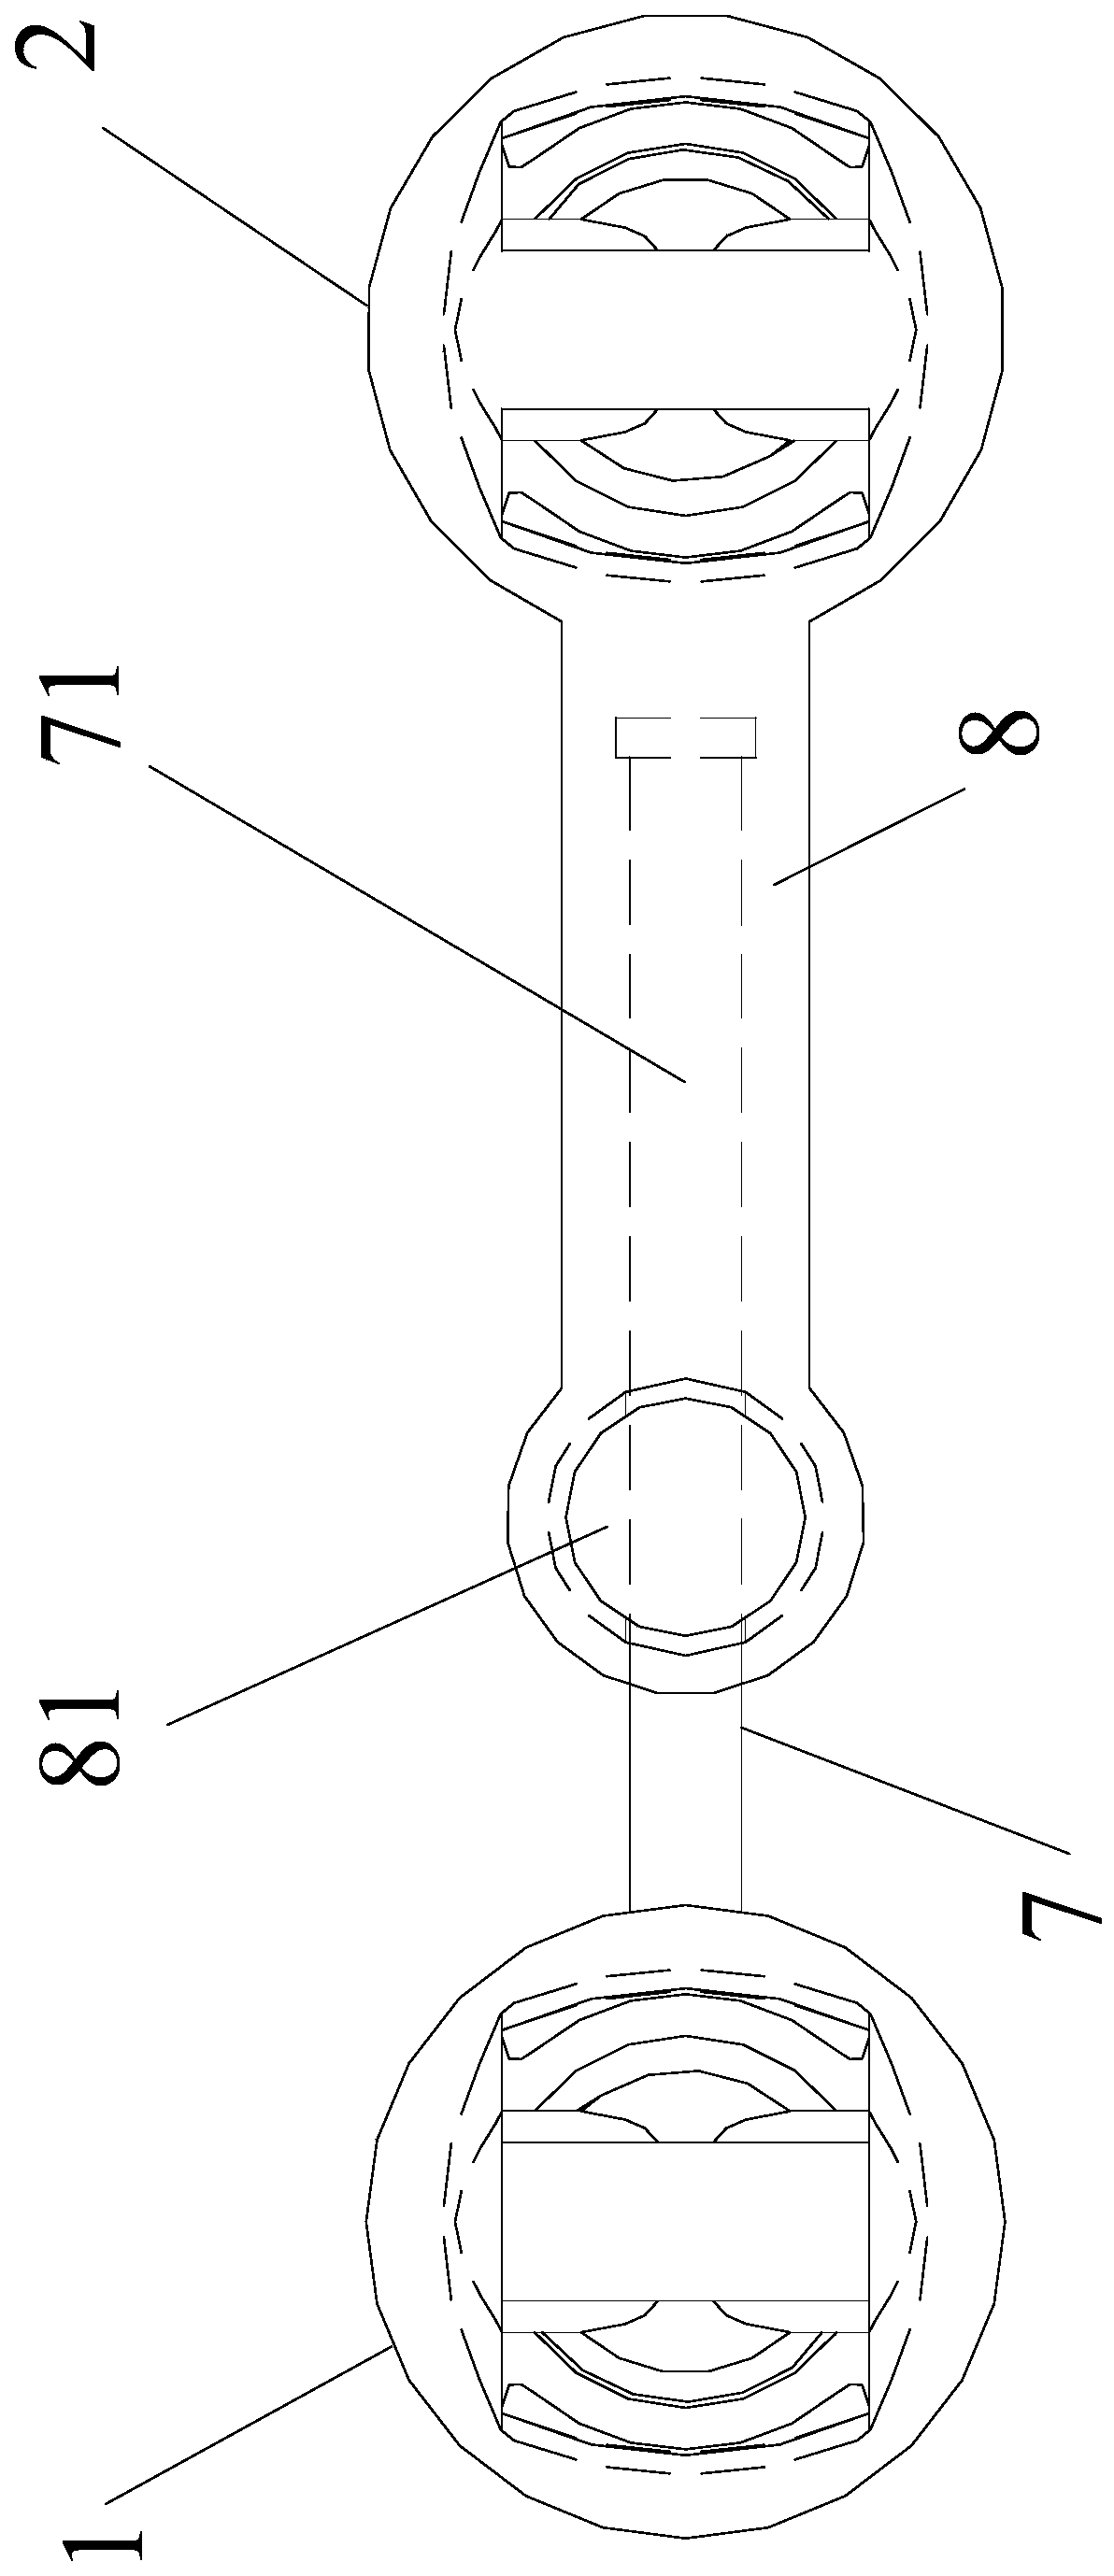 Pedicle screw seat cross-connecting device